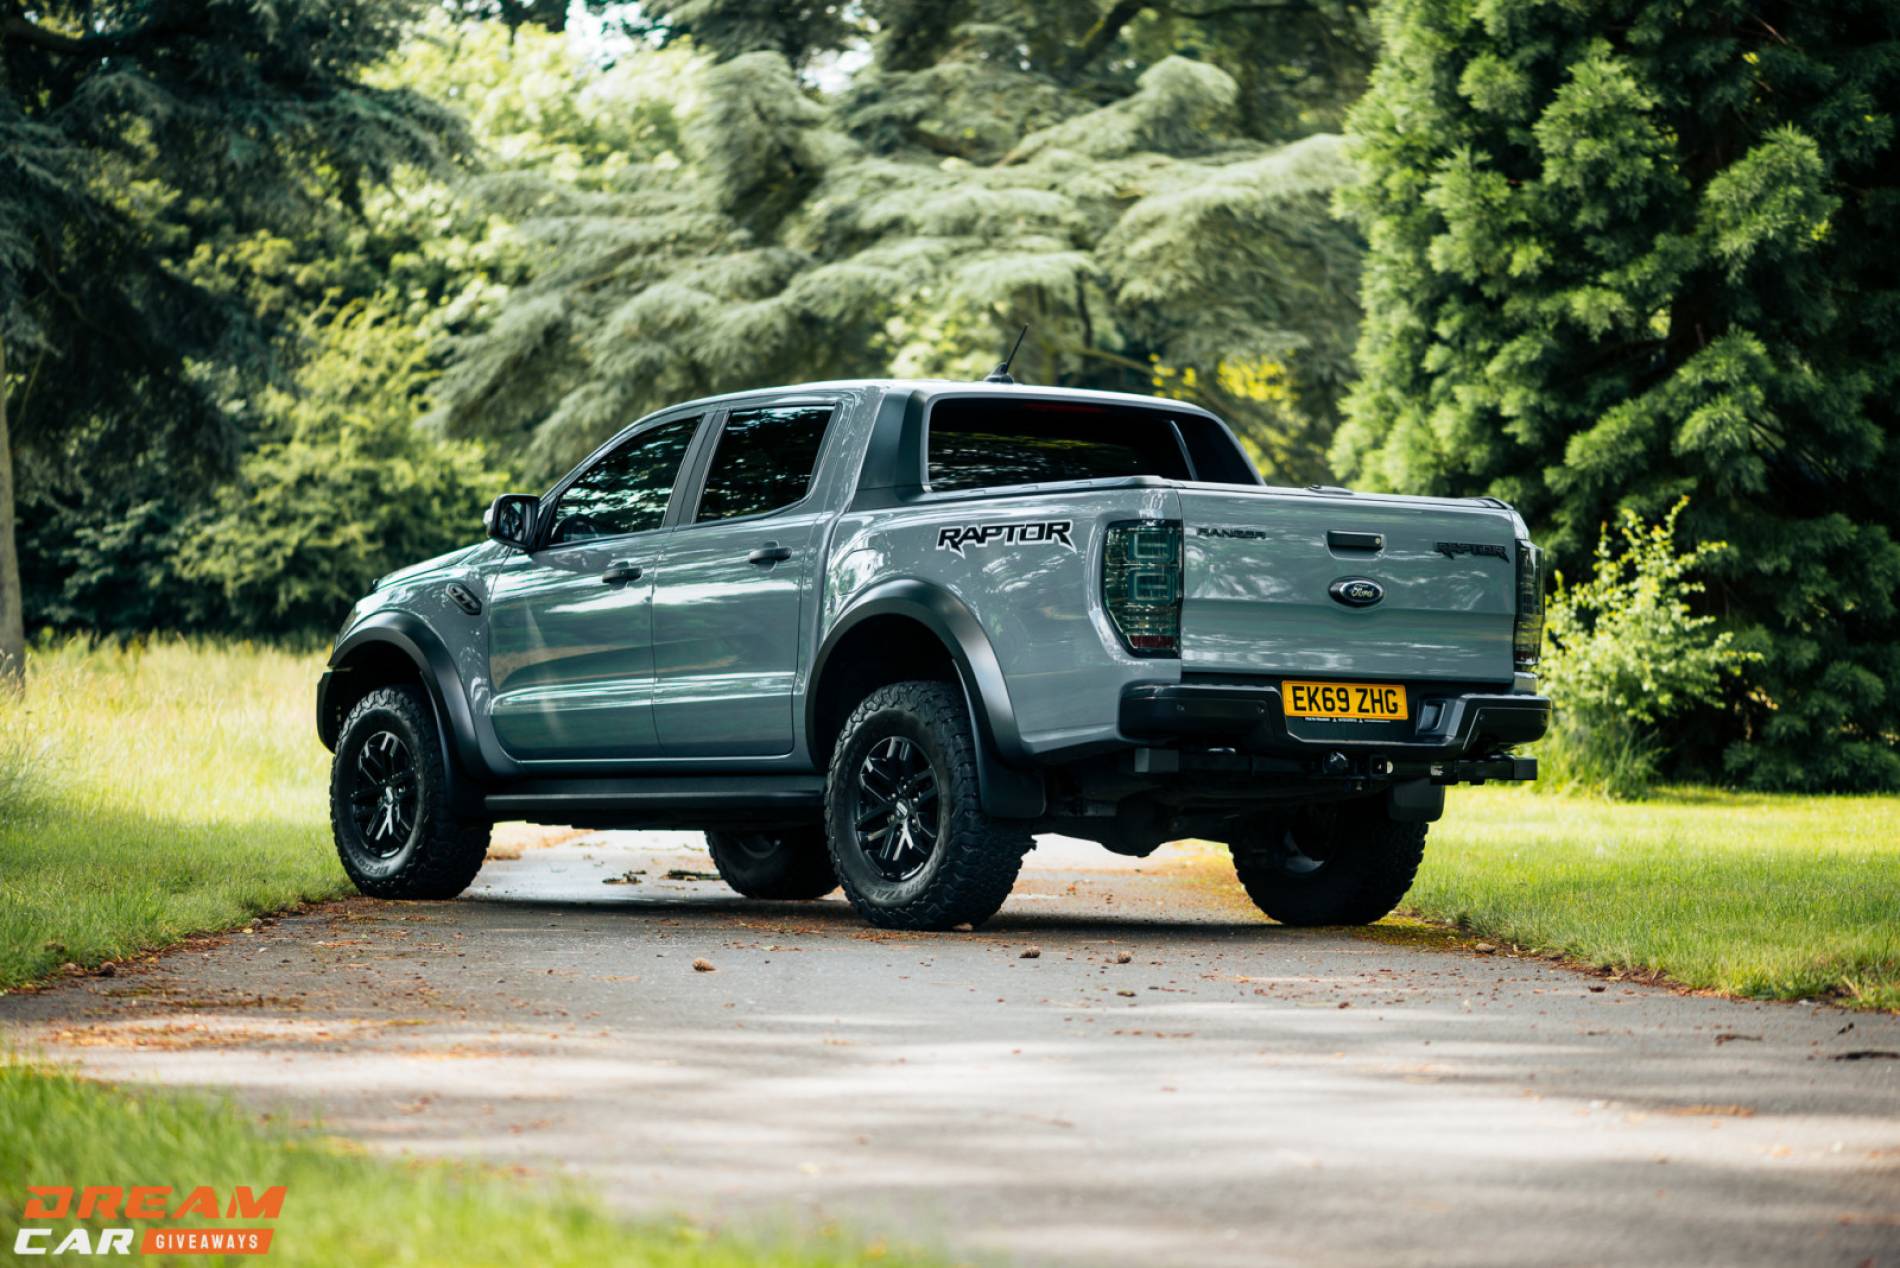 2019 Ford Ranger Raptor + £1000 or £33,000 Tax Free